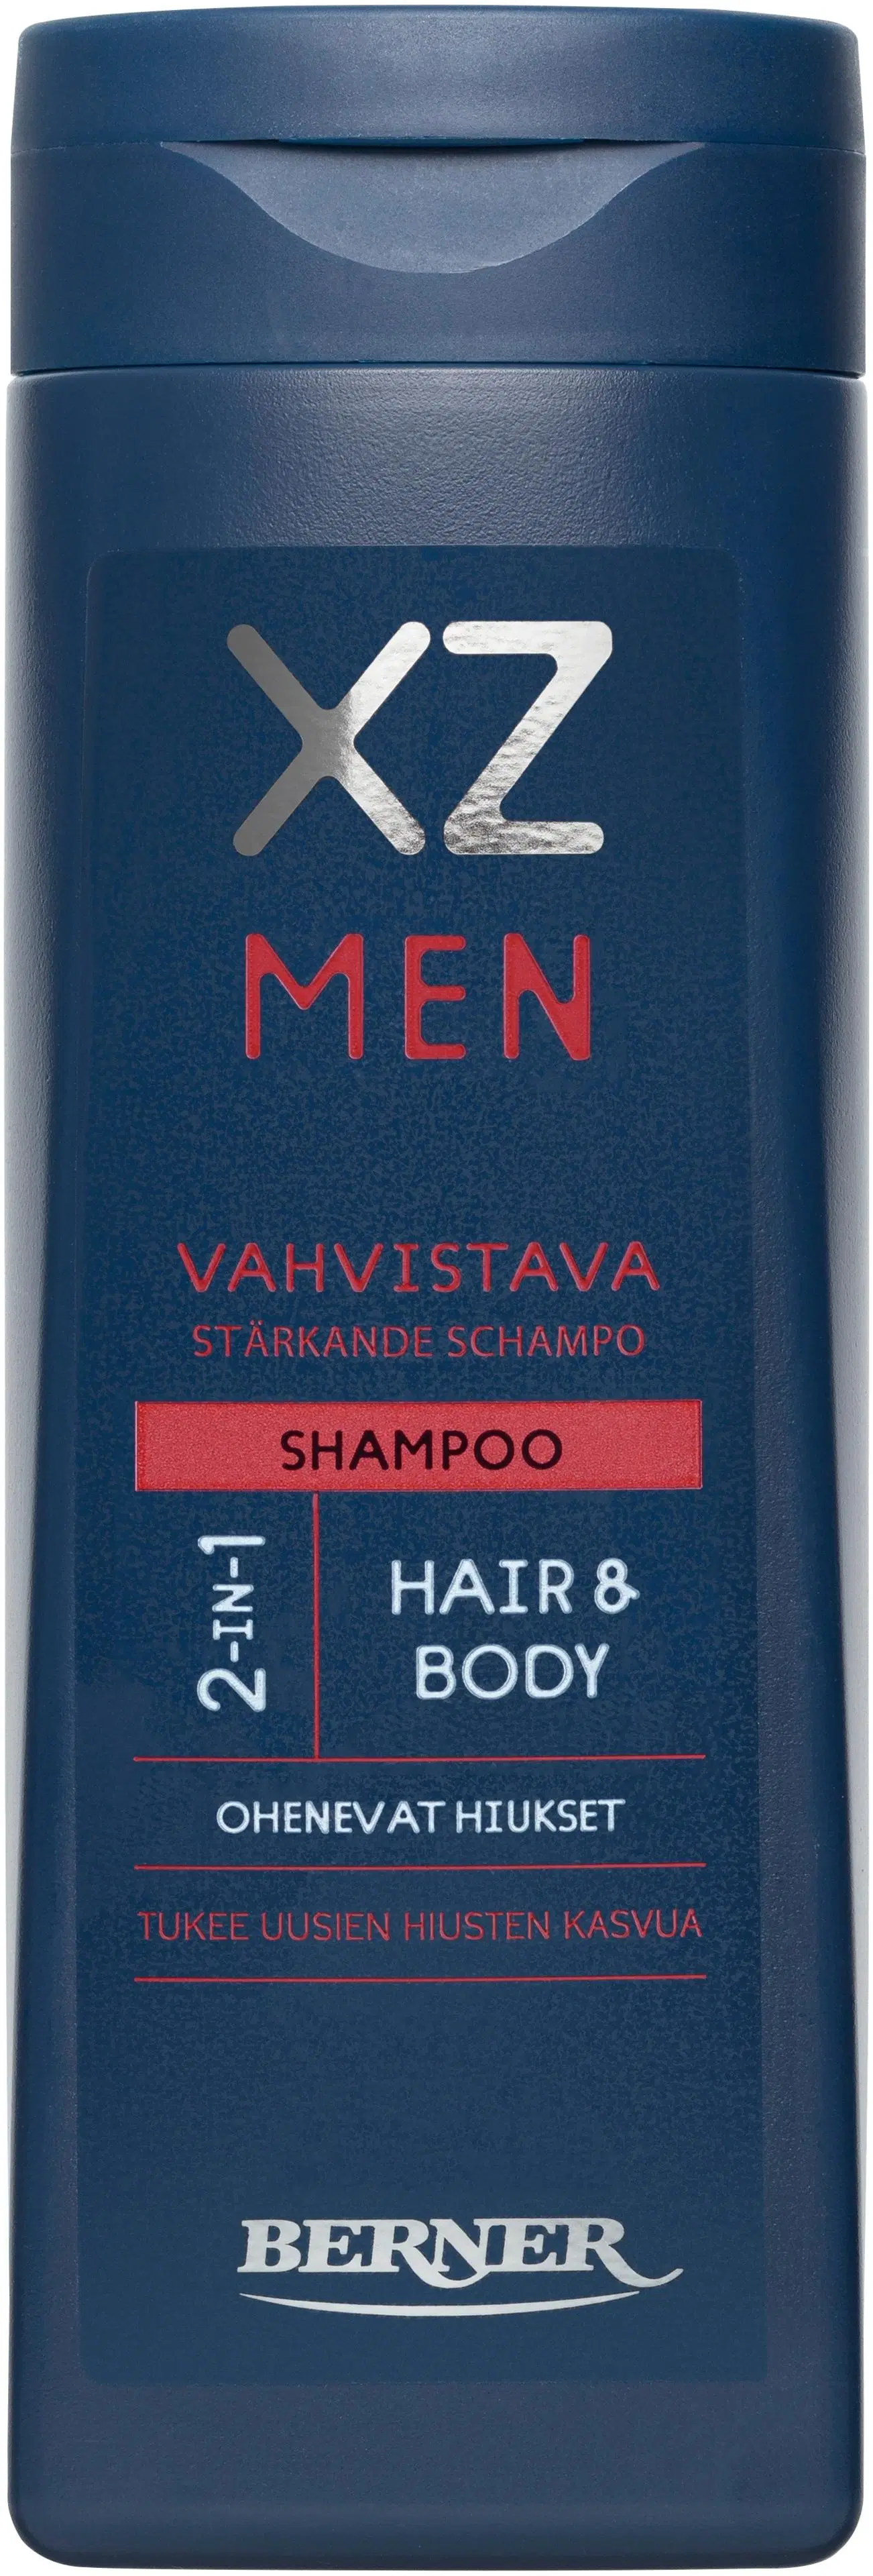 XZ 250ml Men 2-in-1 vahvistava shampoo